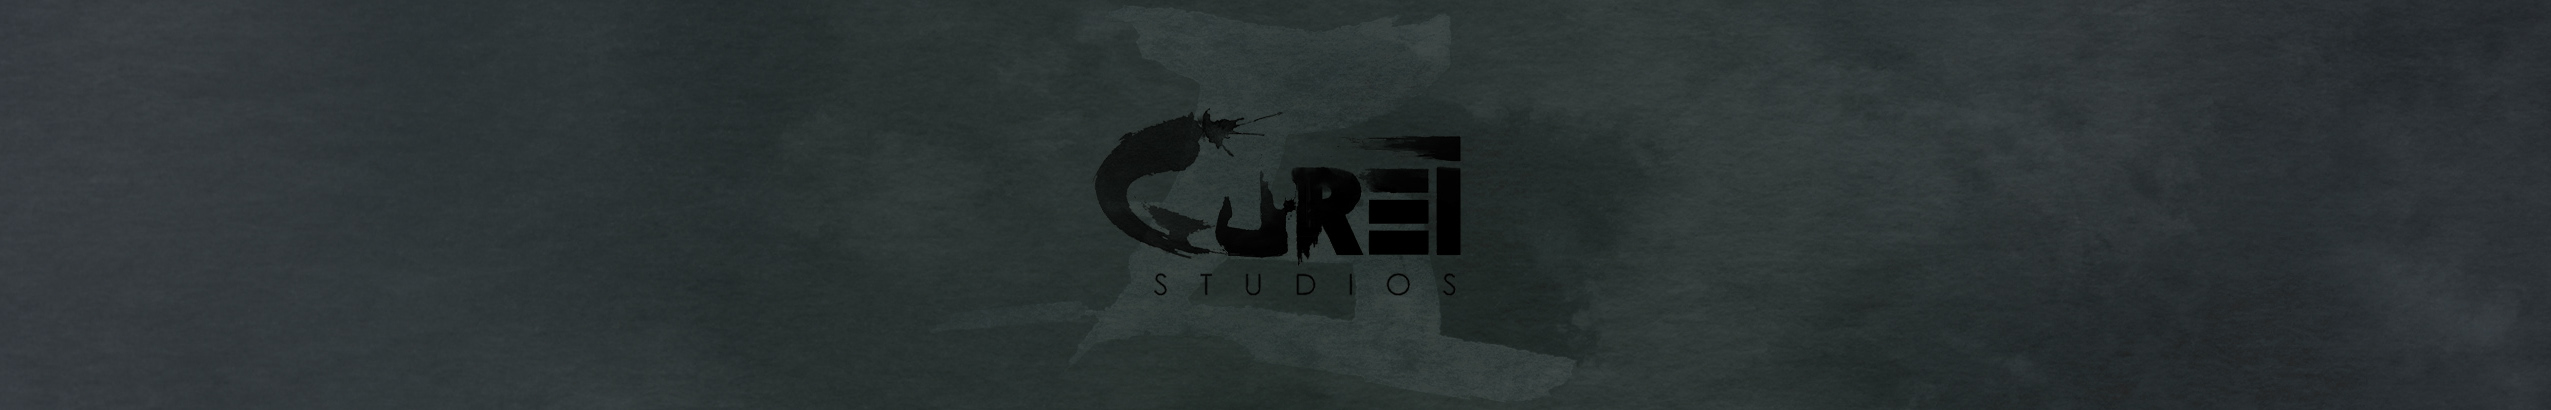 Gurei Studios's profile banner